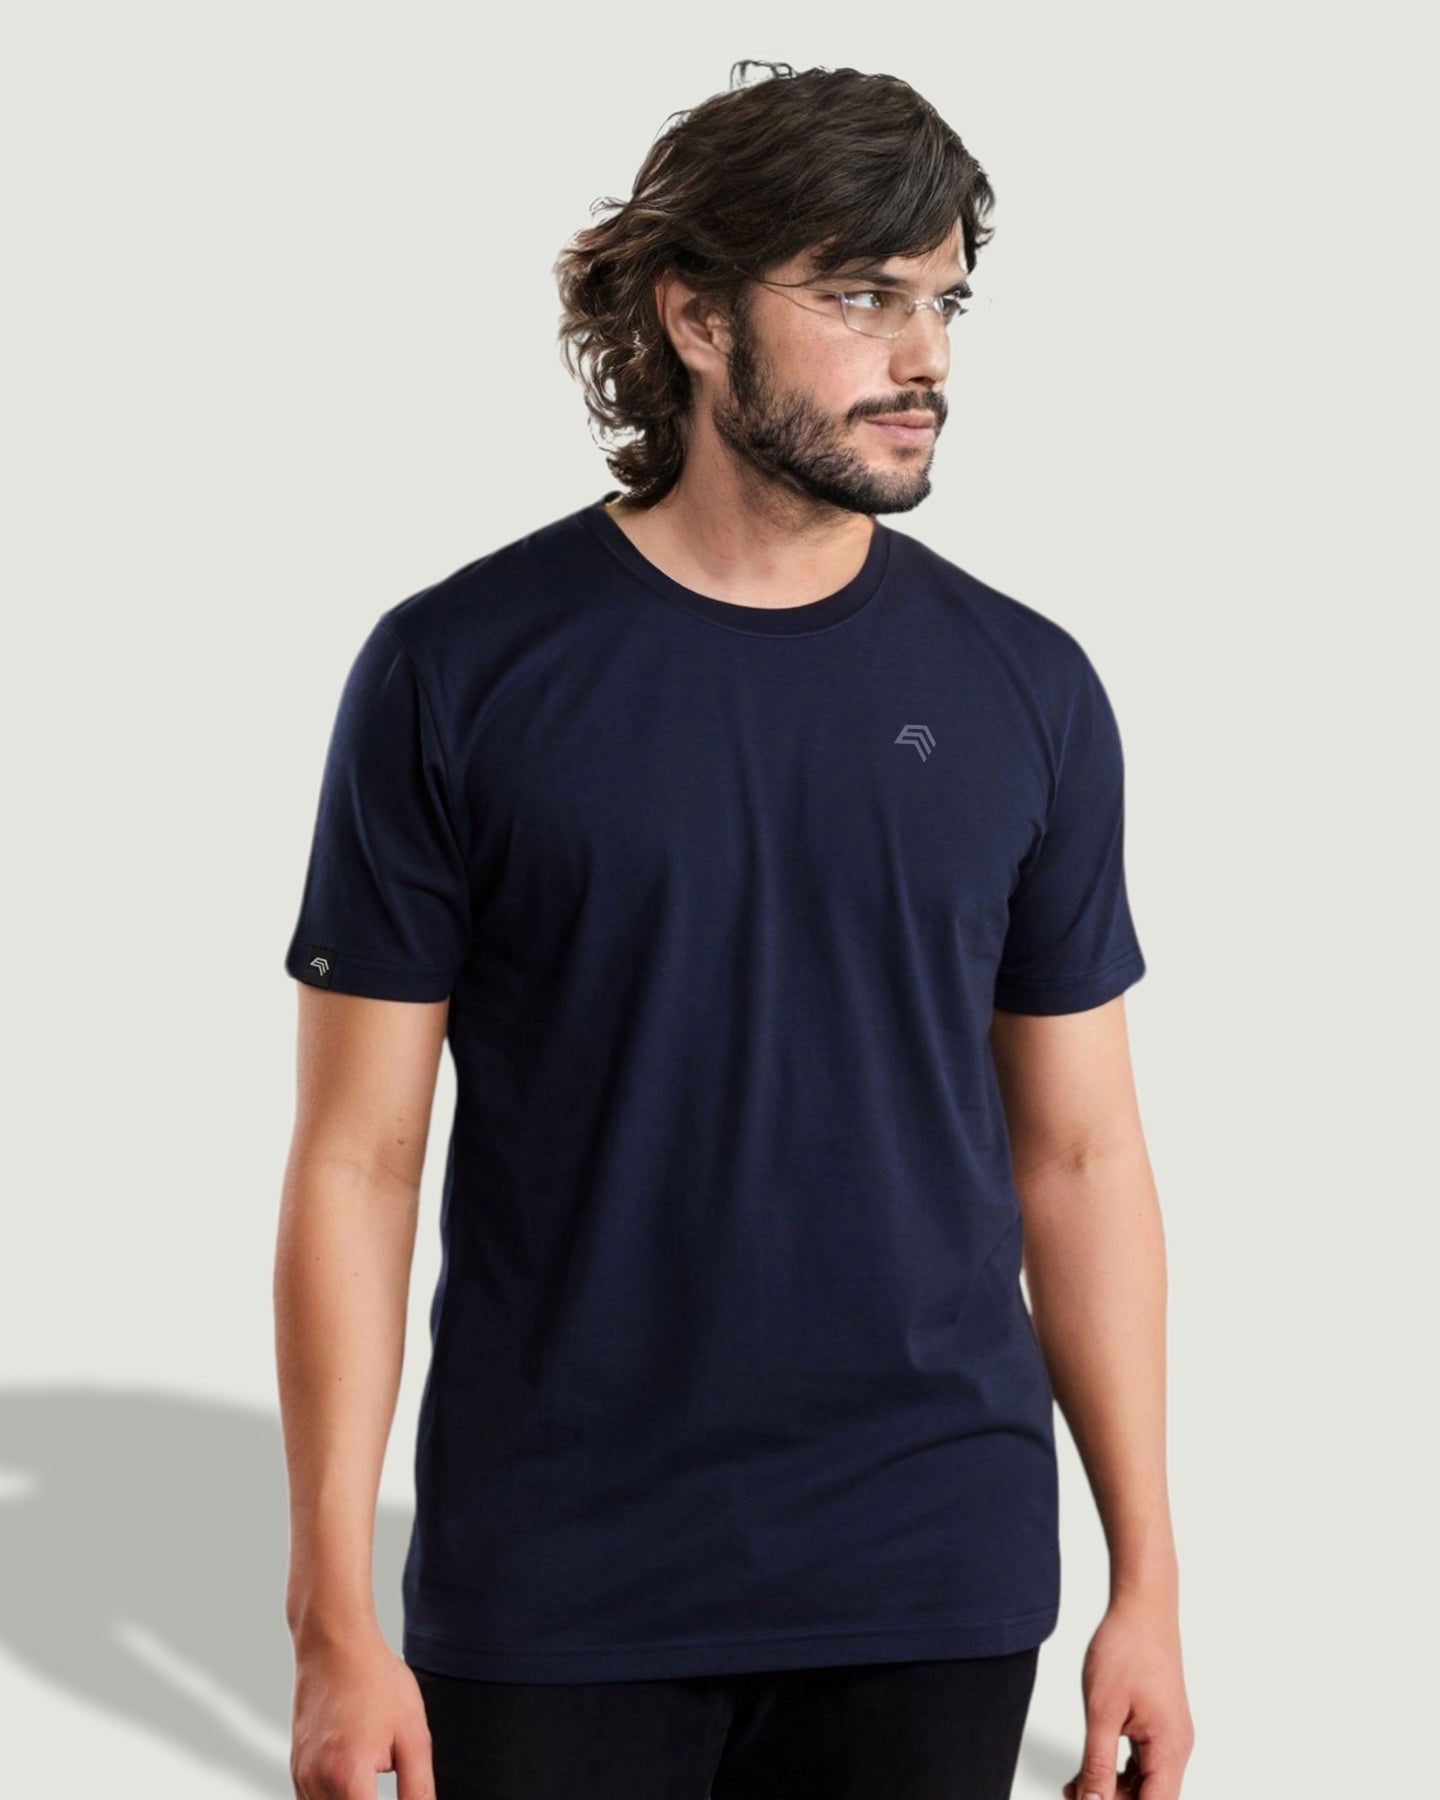 RMH 0101 ― Herren Luxury Bio-Baumwolle T-Shirt - Sand Grau